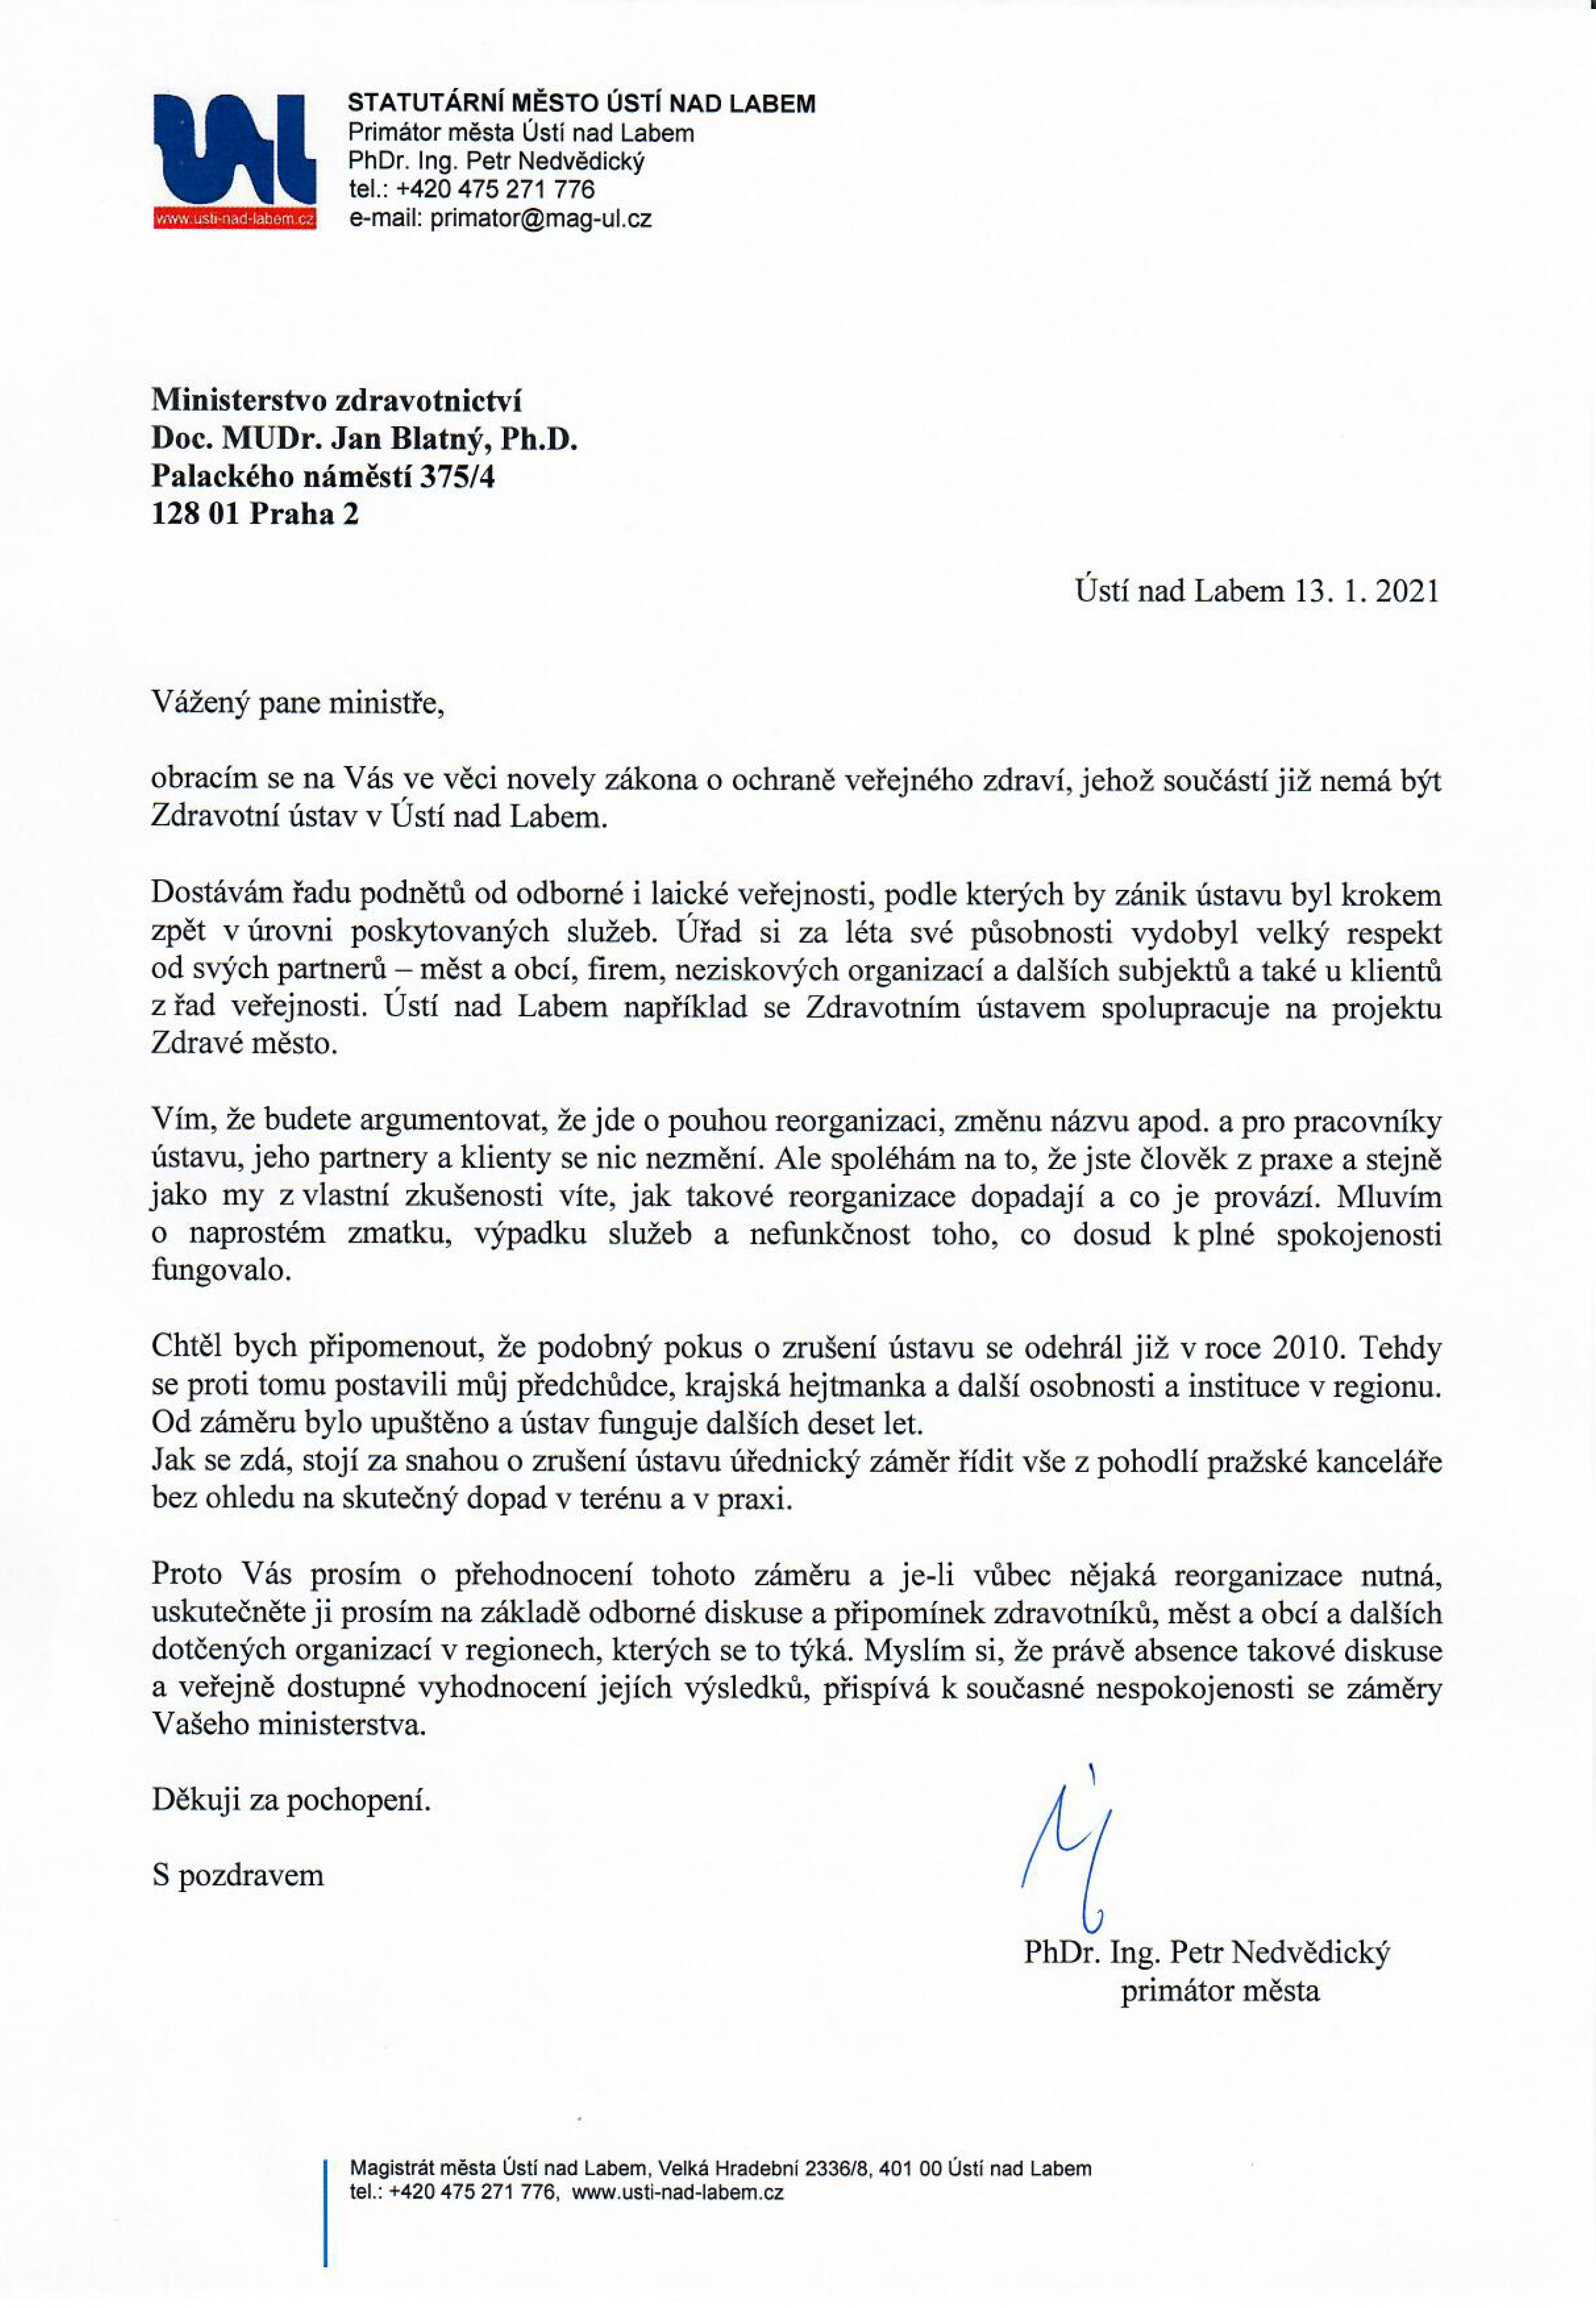 Otevřený dopis primátora Petra Nedvědického